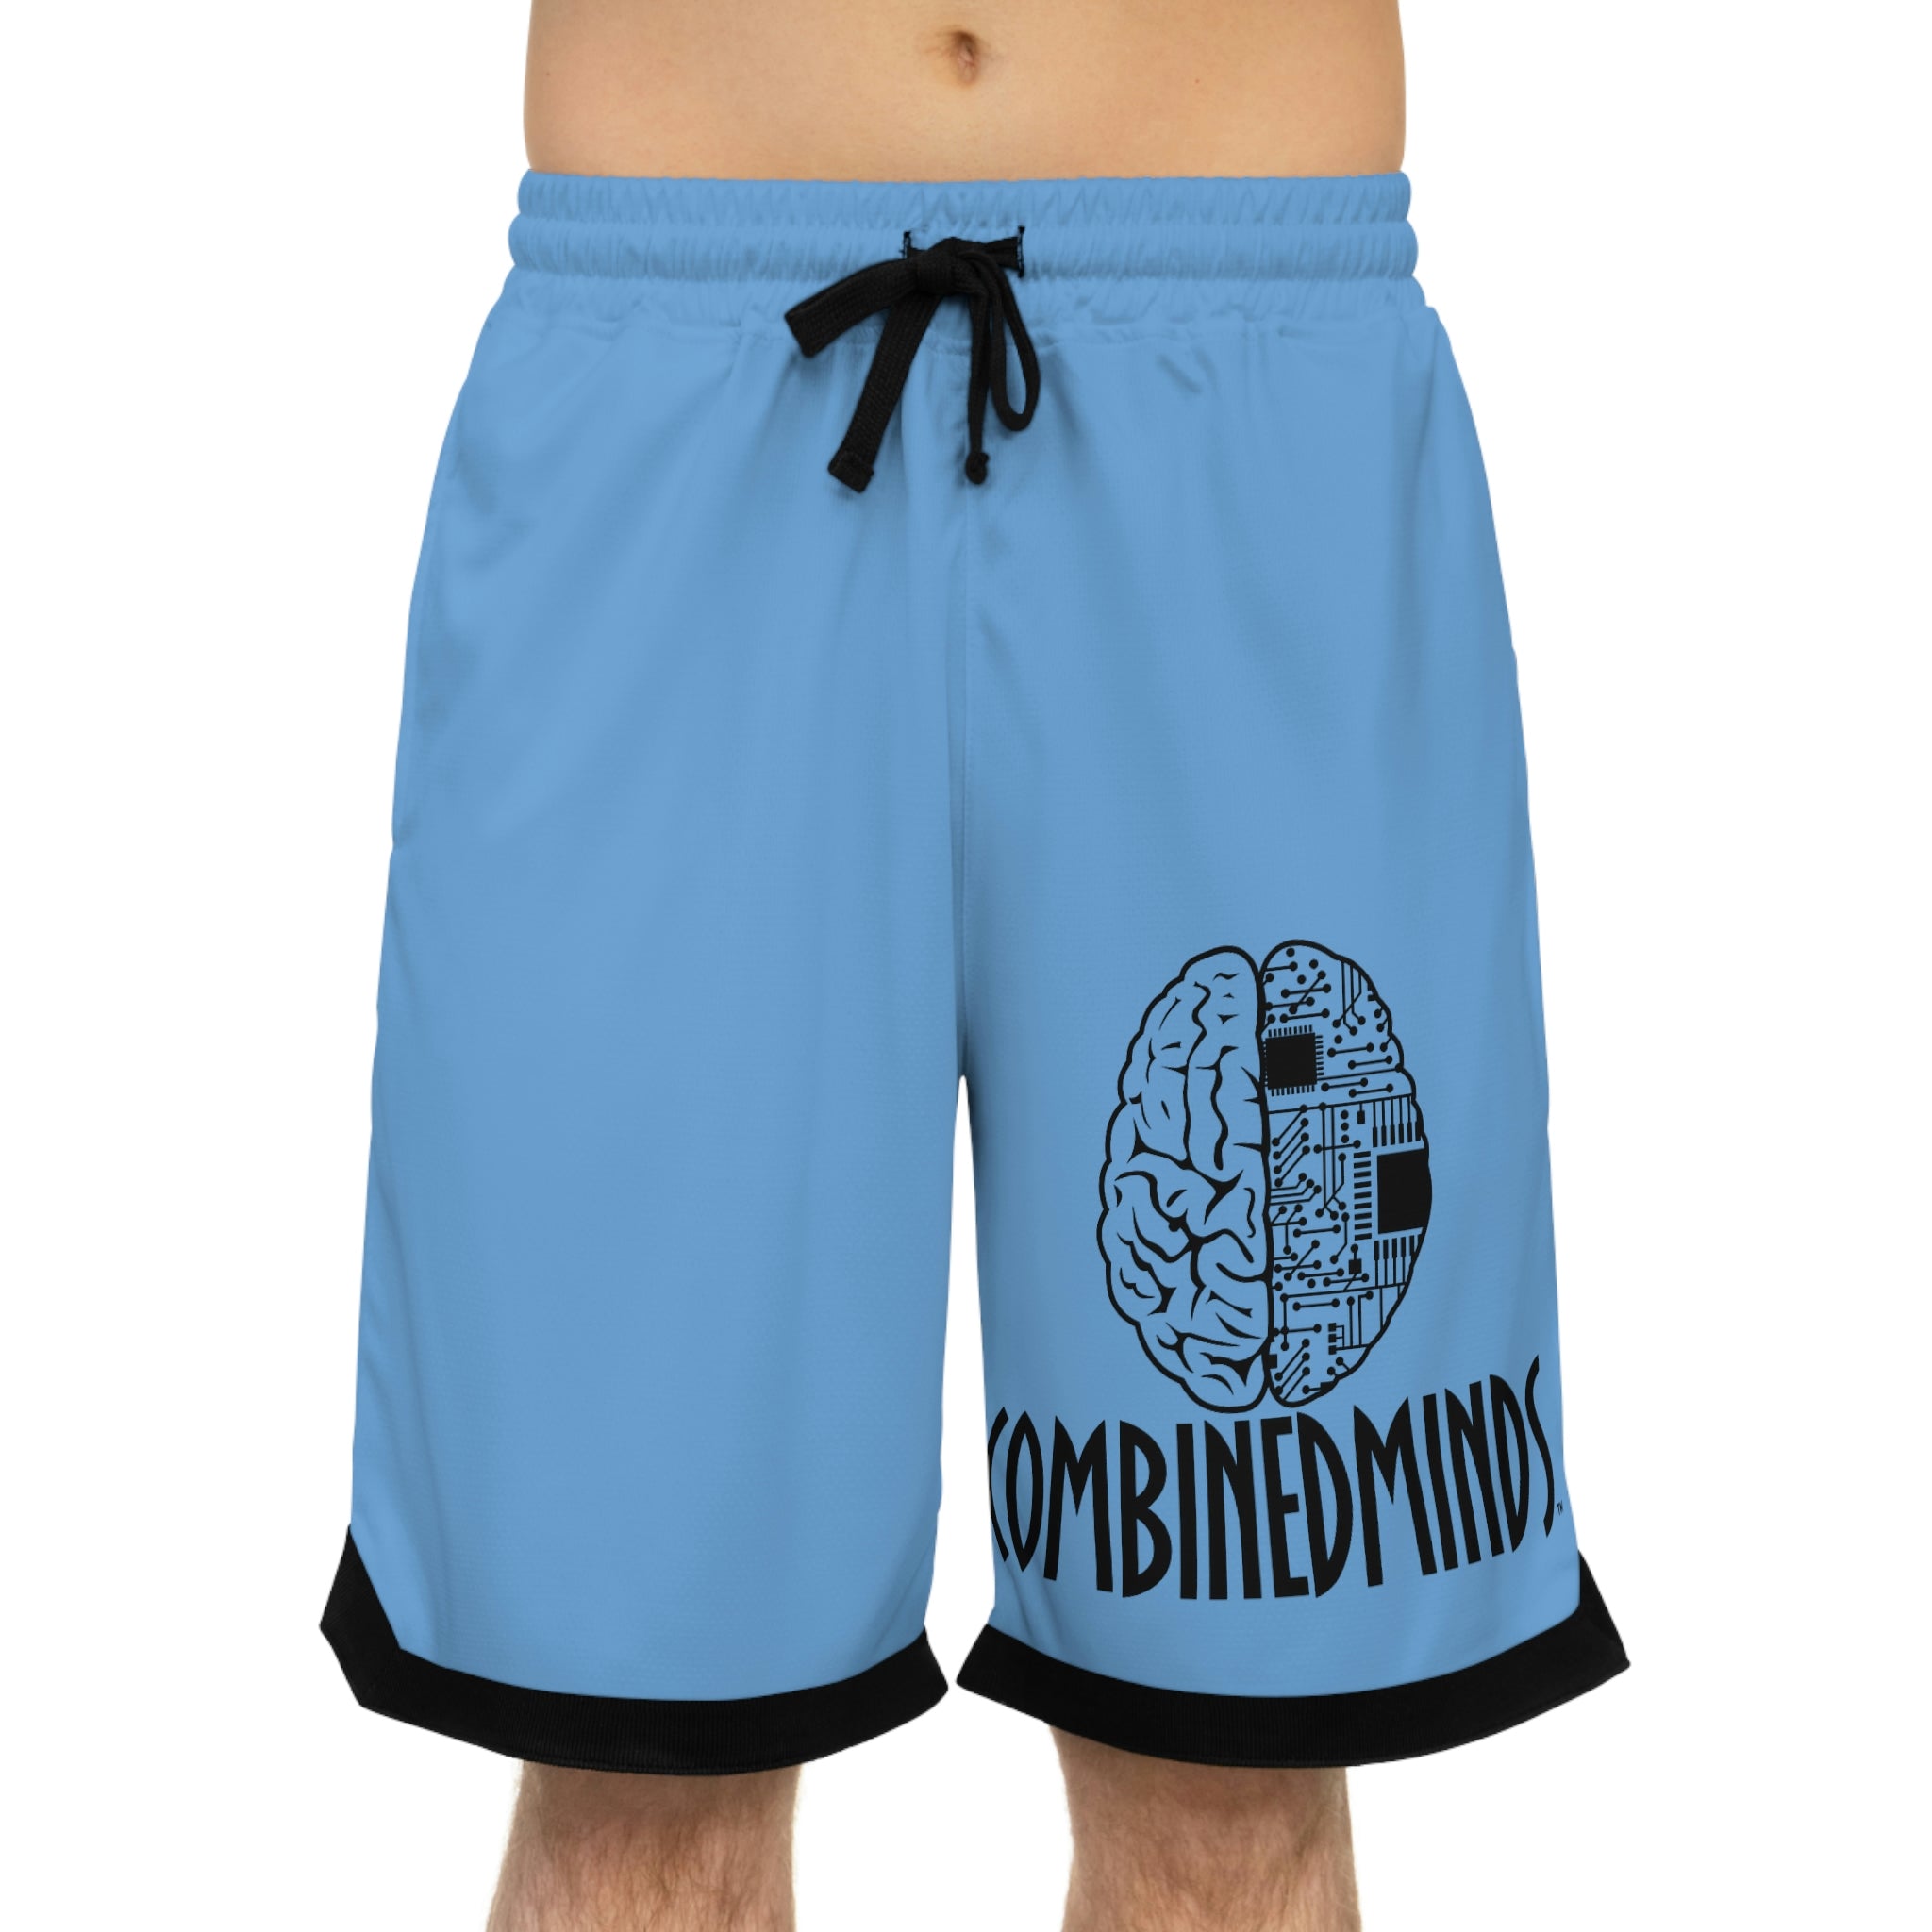 Combinedminds Basketball Shorts Light Blue/Black Logo